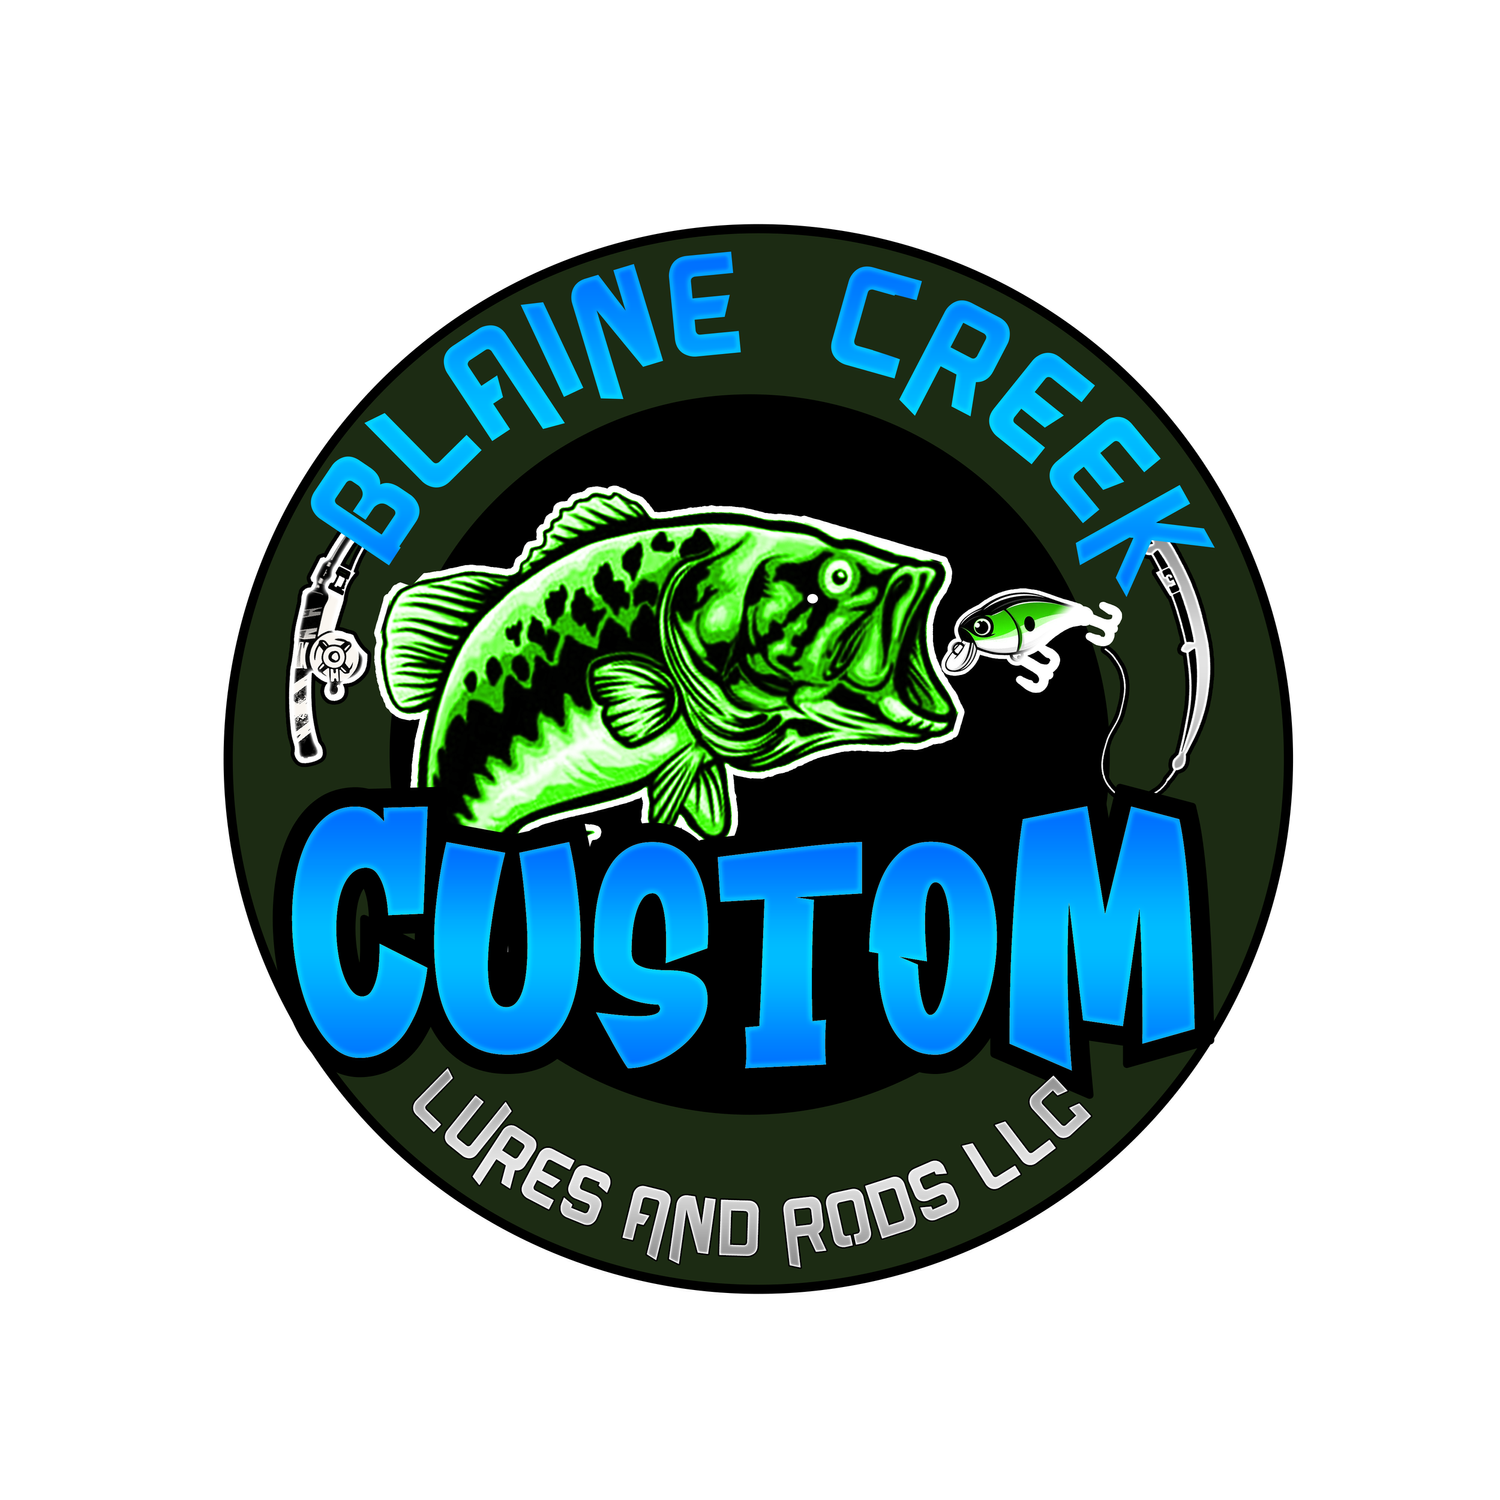 Blaine Creek Custom Lures and Rods, LLC